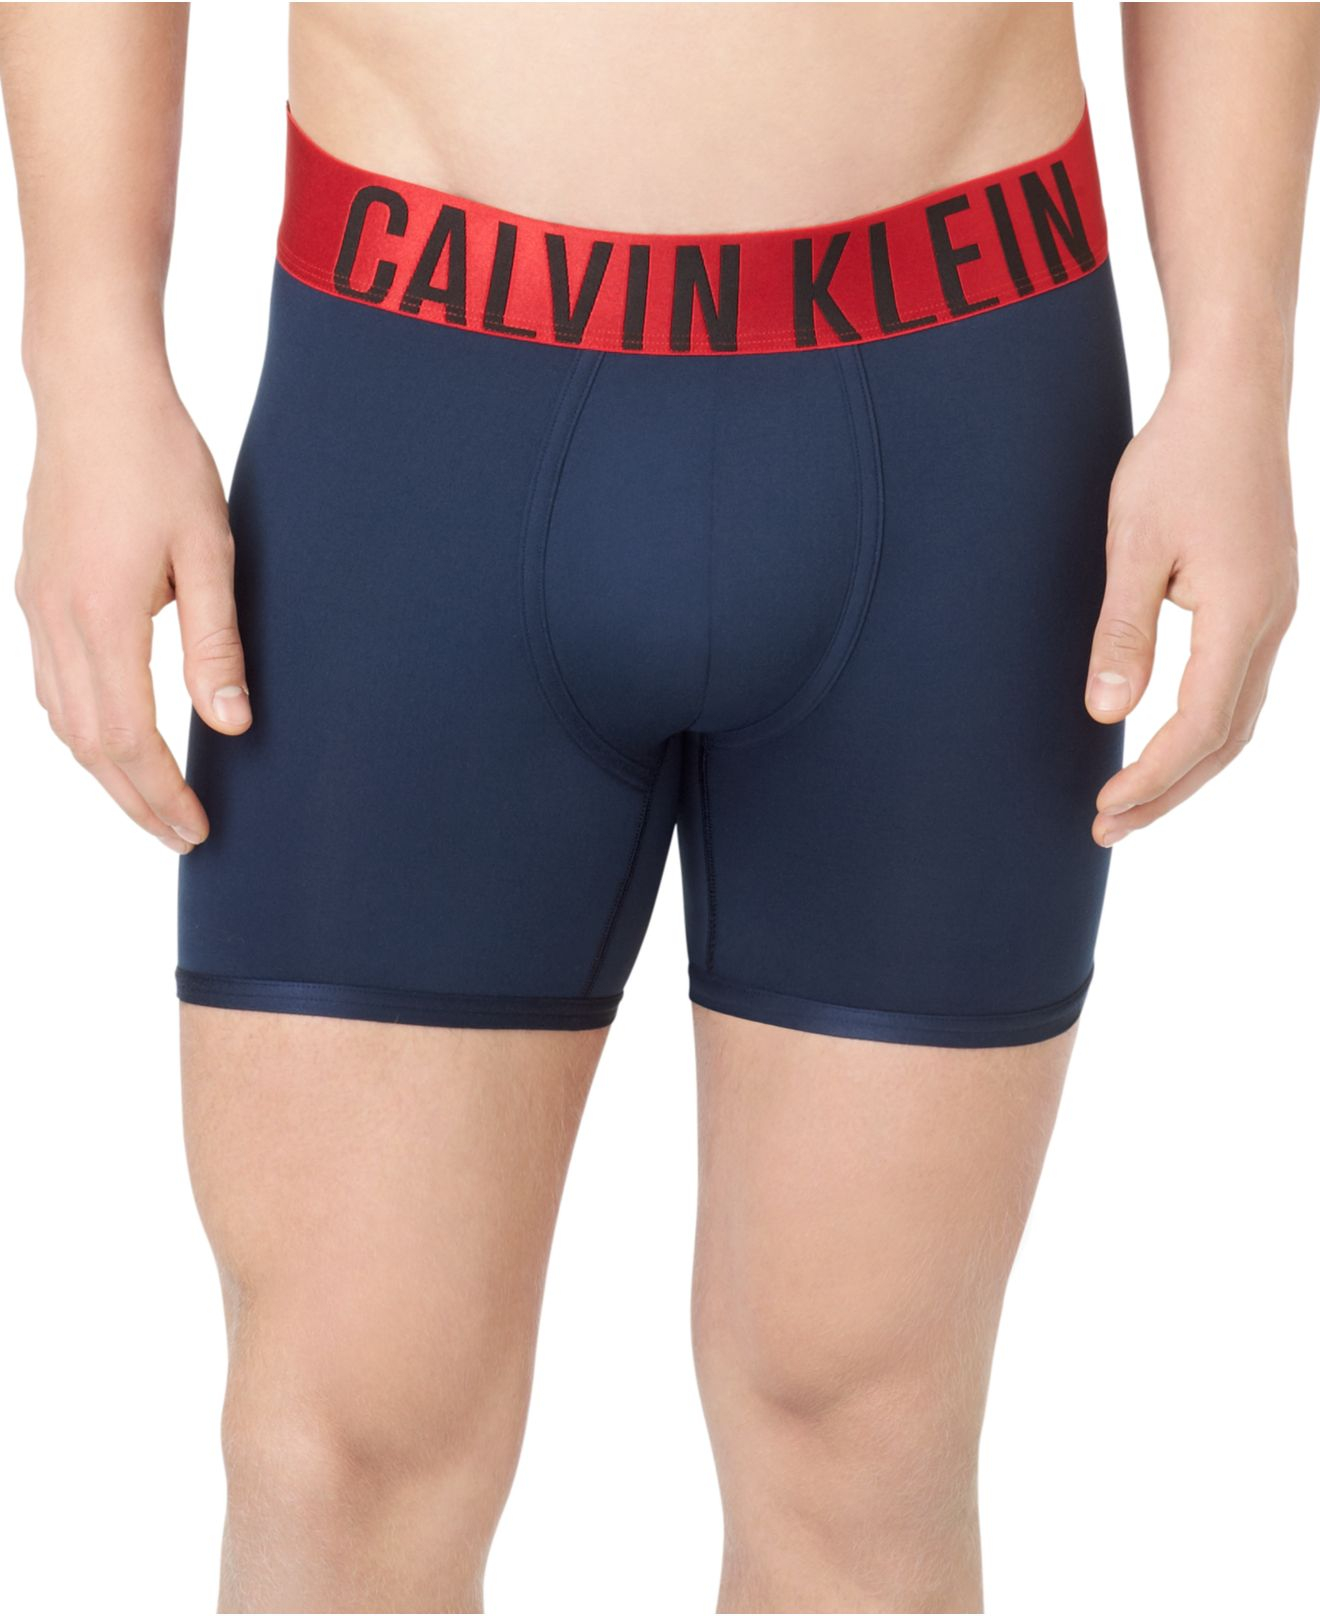 Lyst - Calvin Klein Men's Microfiber Boxer Briefs in Blue for Men